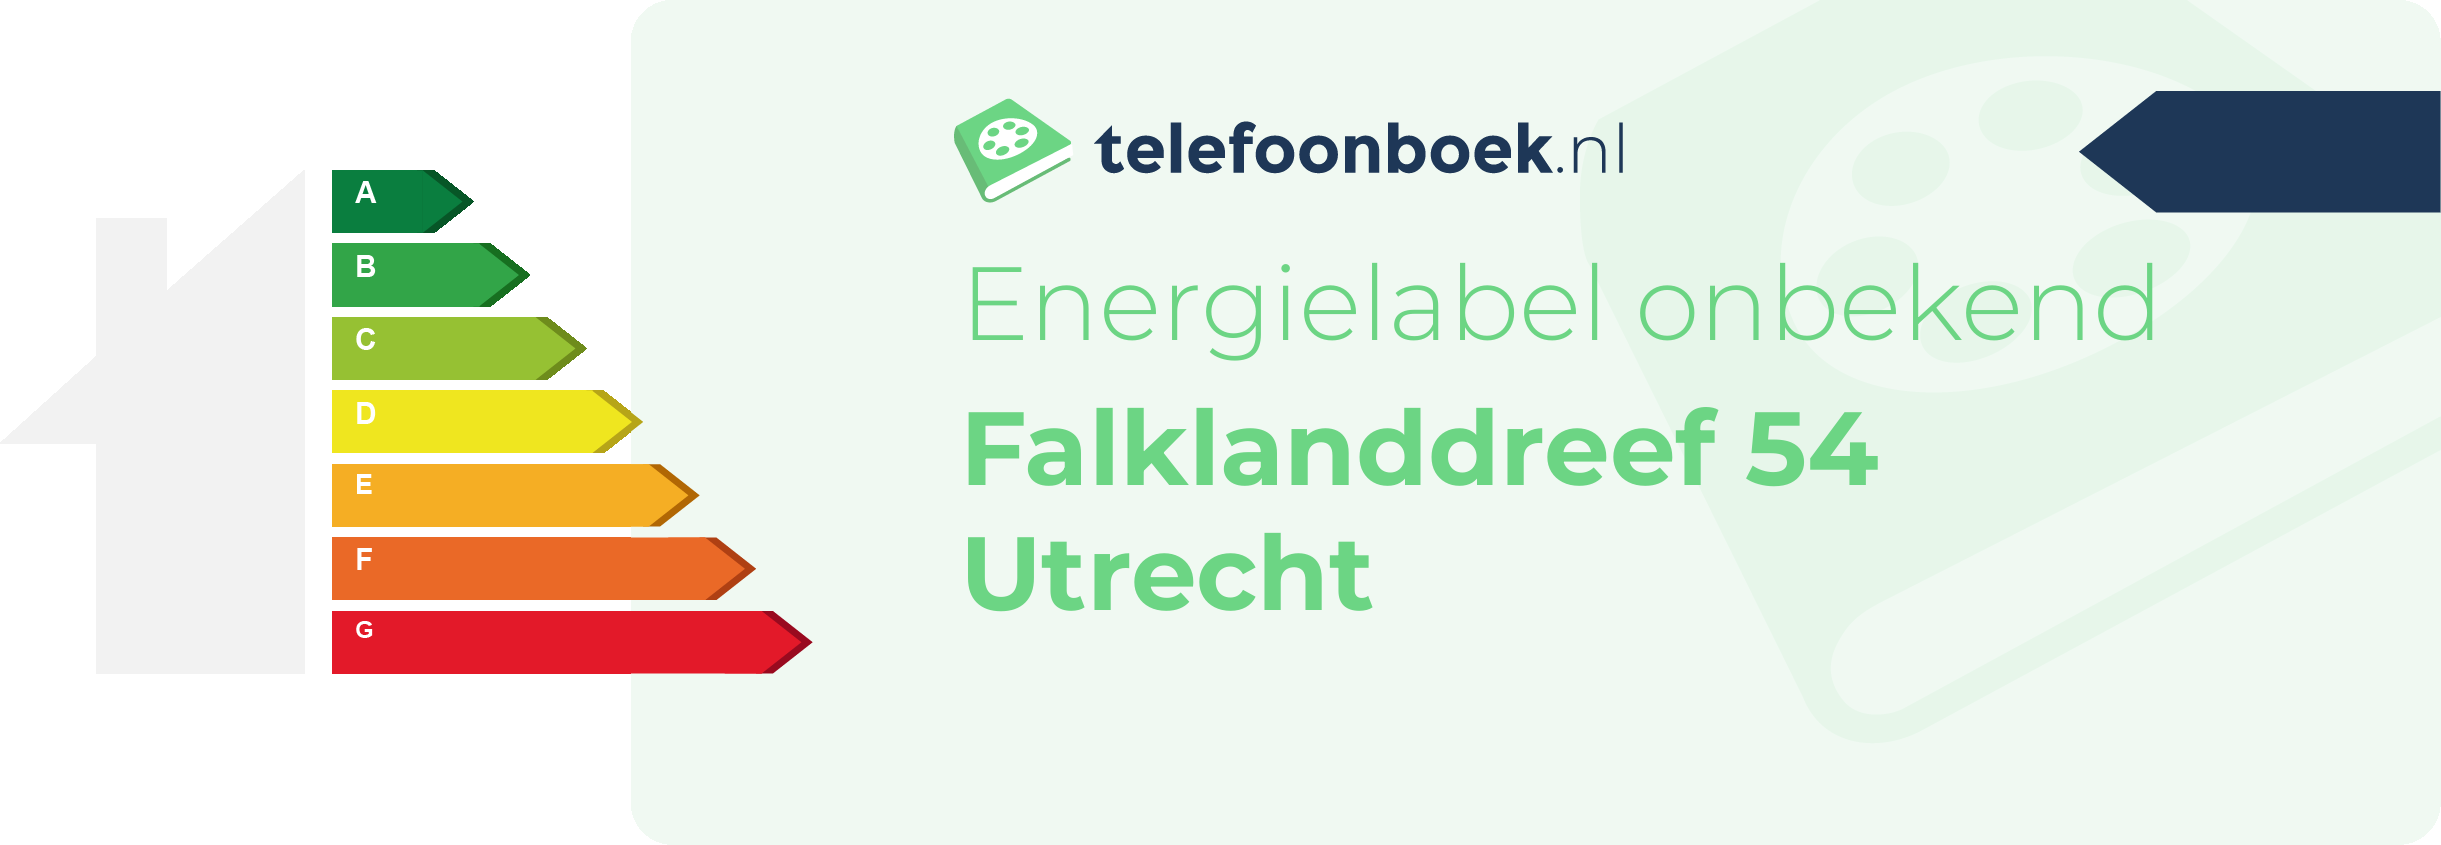 Energielabel Falklanddreef 54 Utrecht